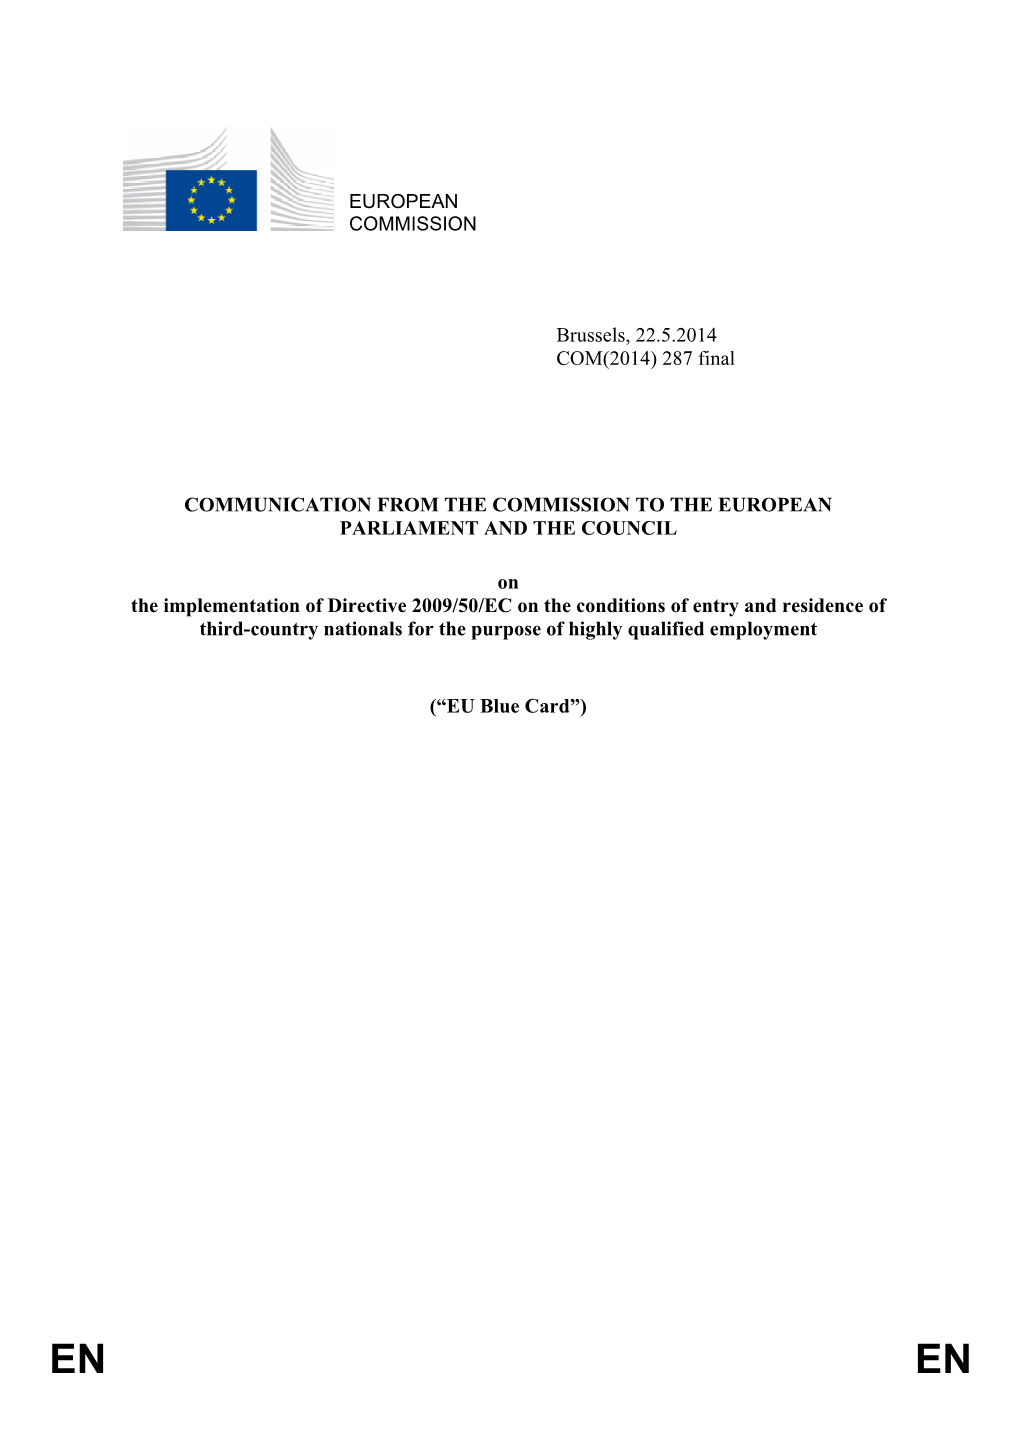 EU Blue Card Directive (2009/50/EC)